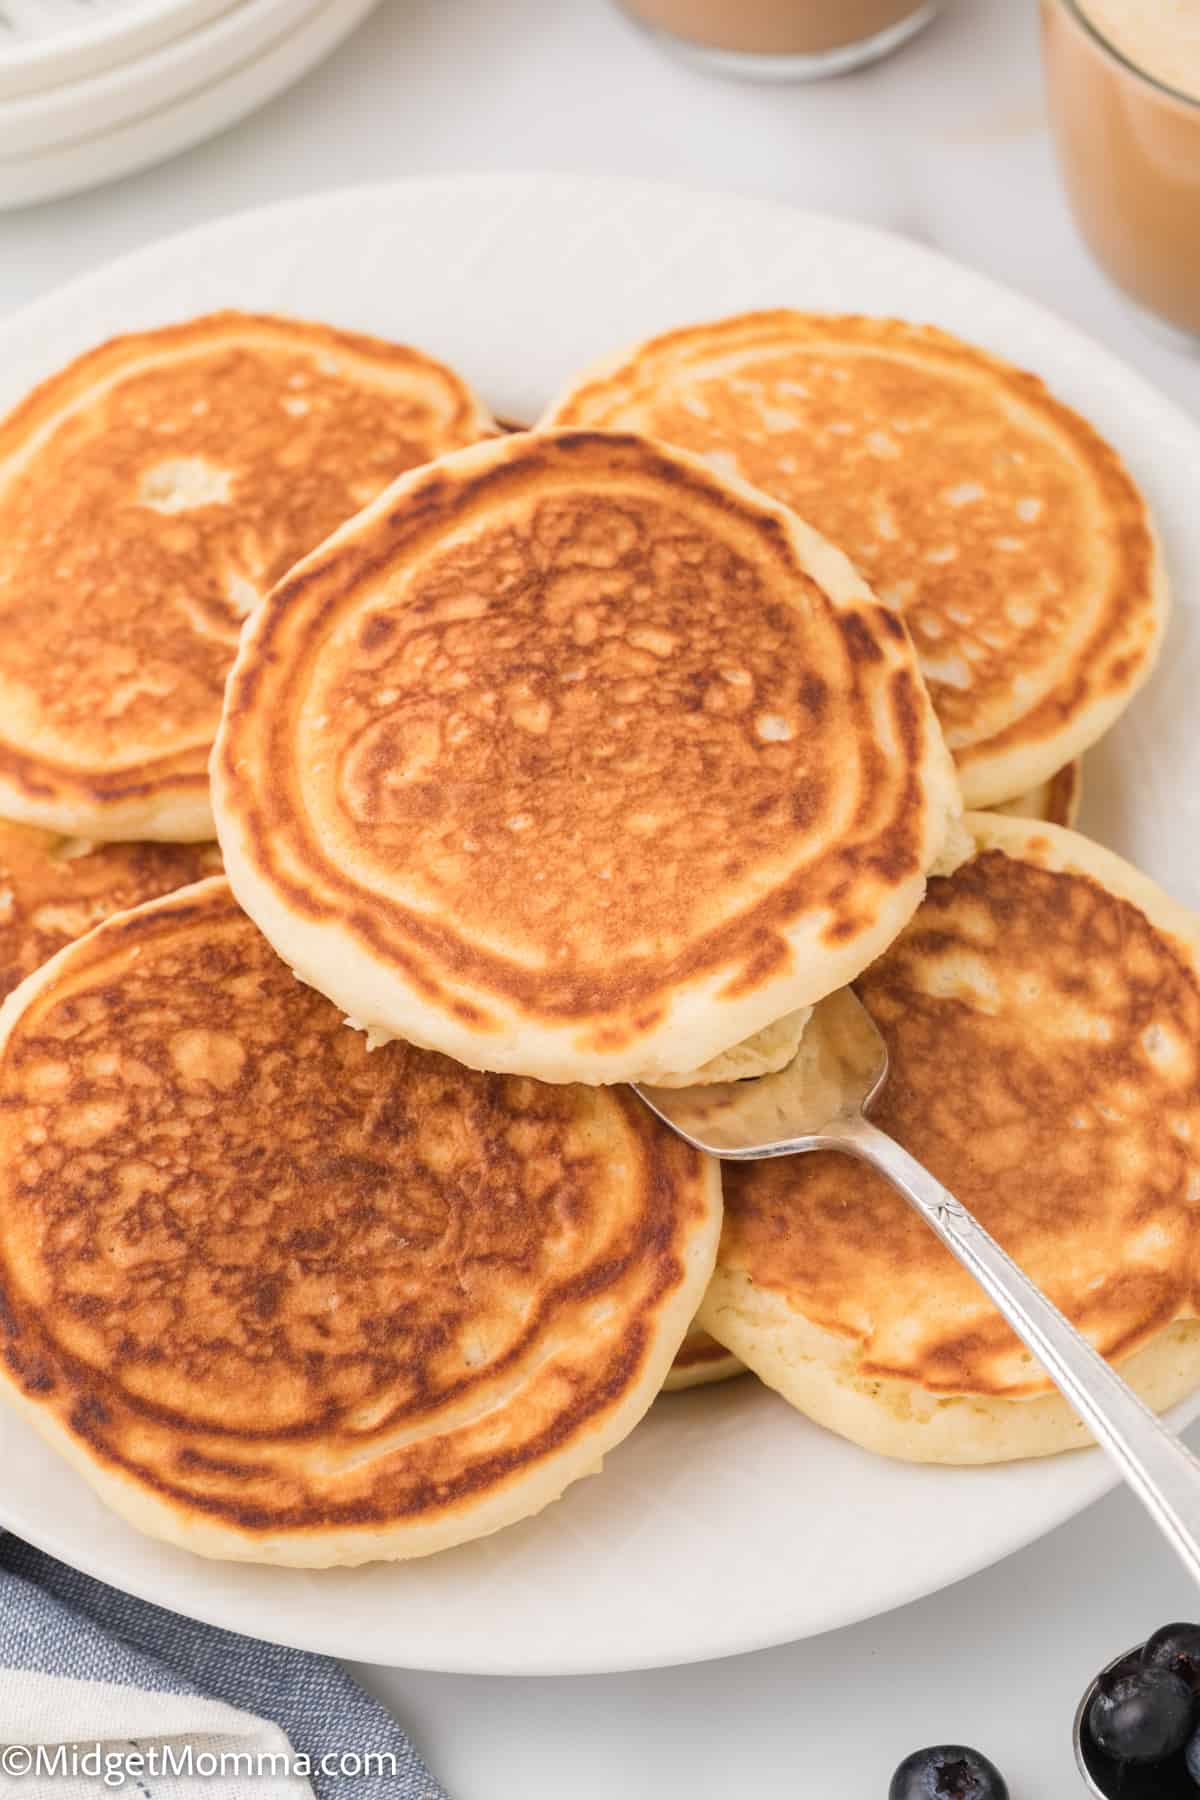 The Best Fluffy Homemade Pancakes Recipe